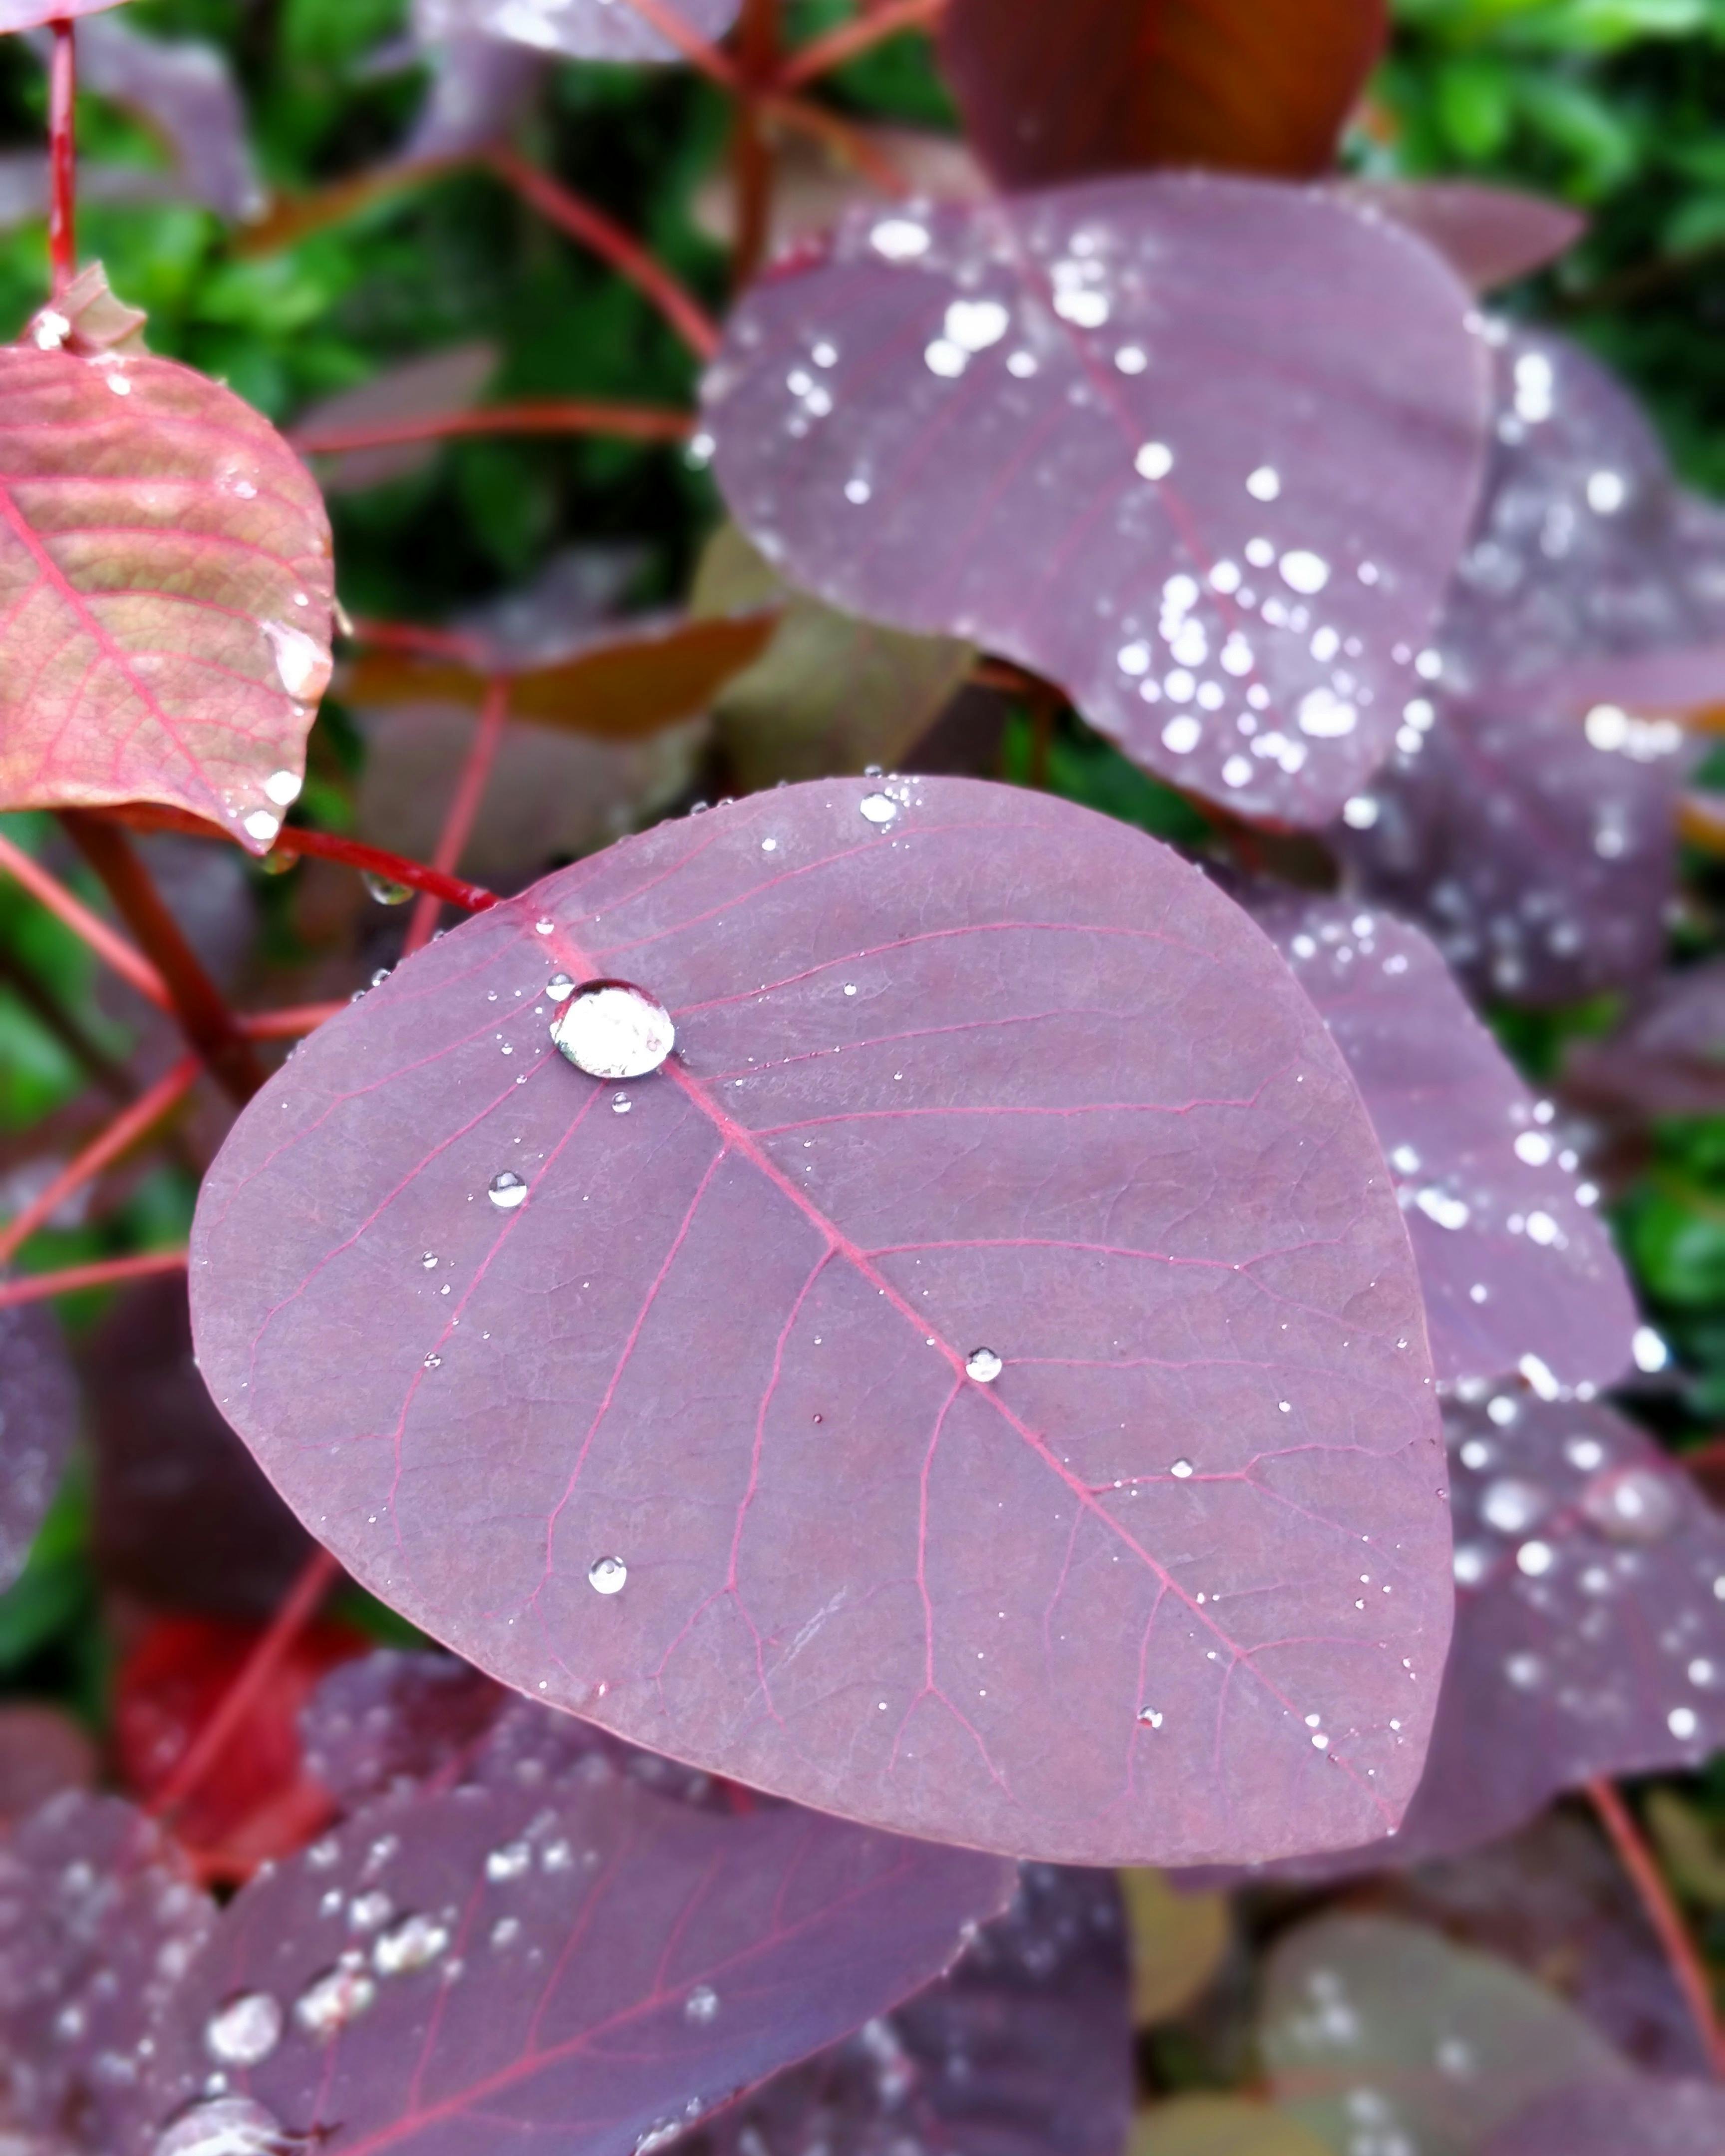 Free stock photo of #leaves #drop #nature #mist #rain